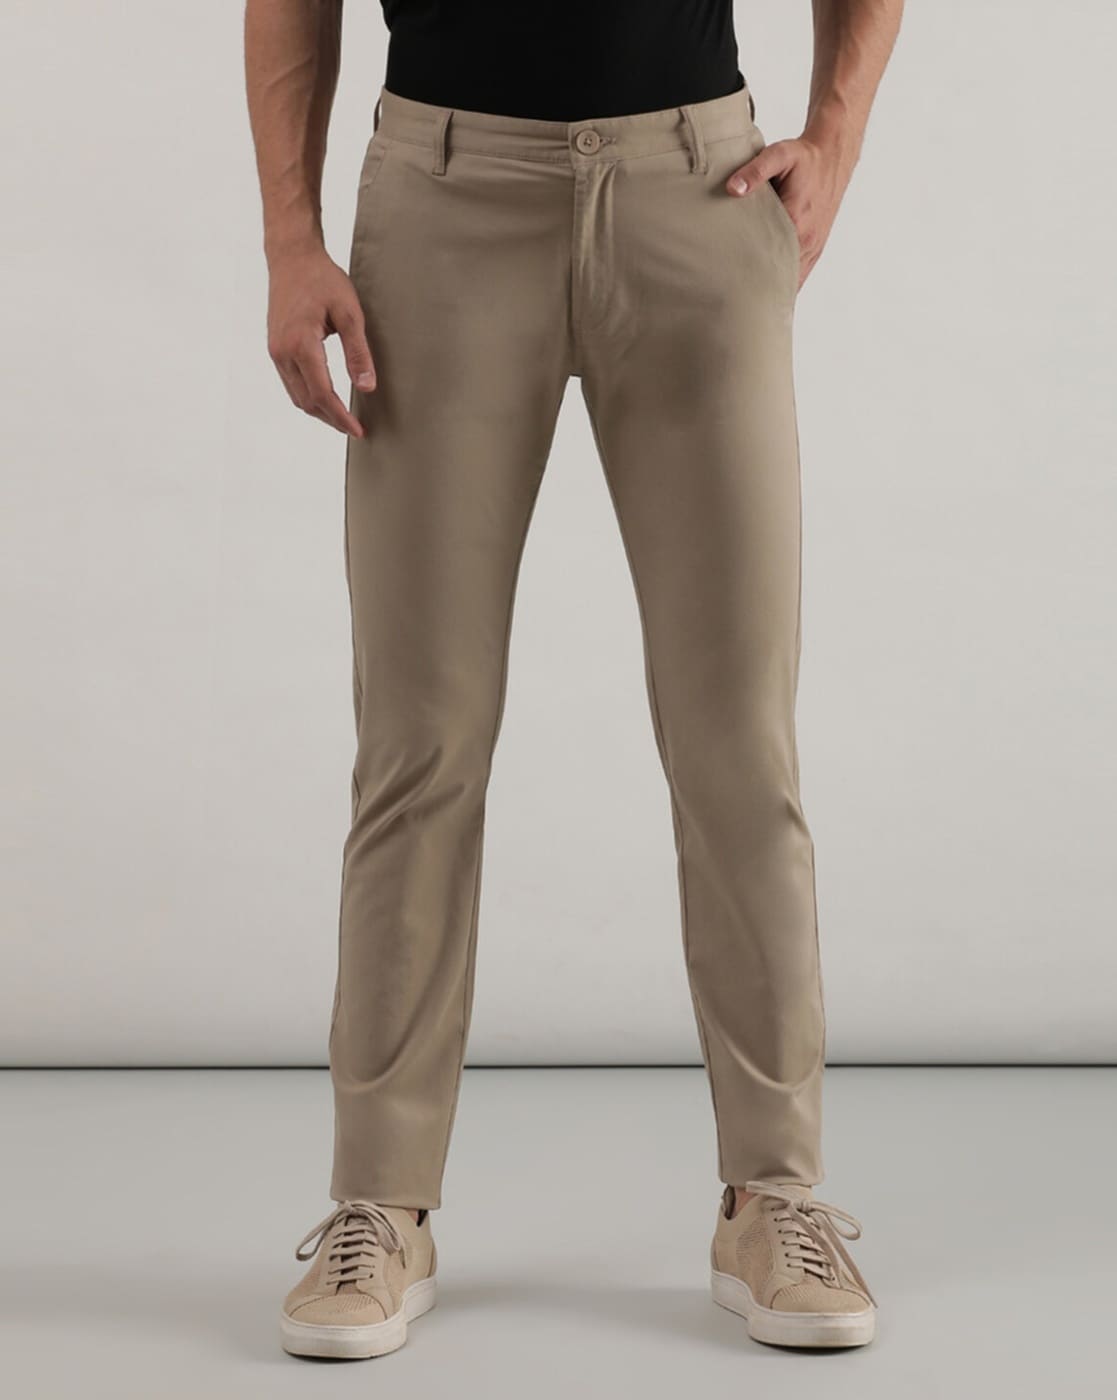 Casual Wear LeeMount Mens Cotton Trousers Size 2840 Inch